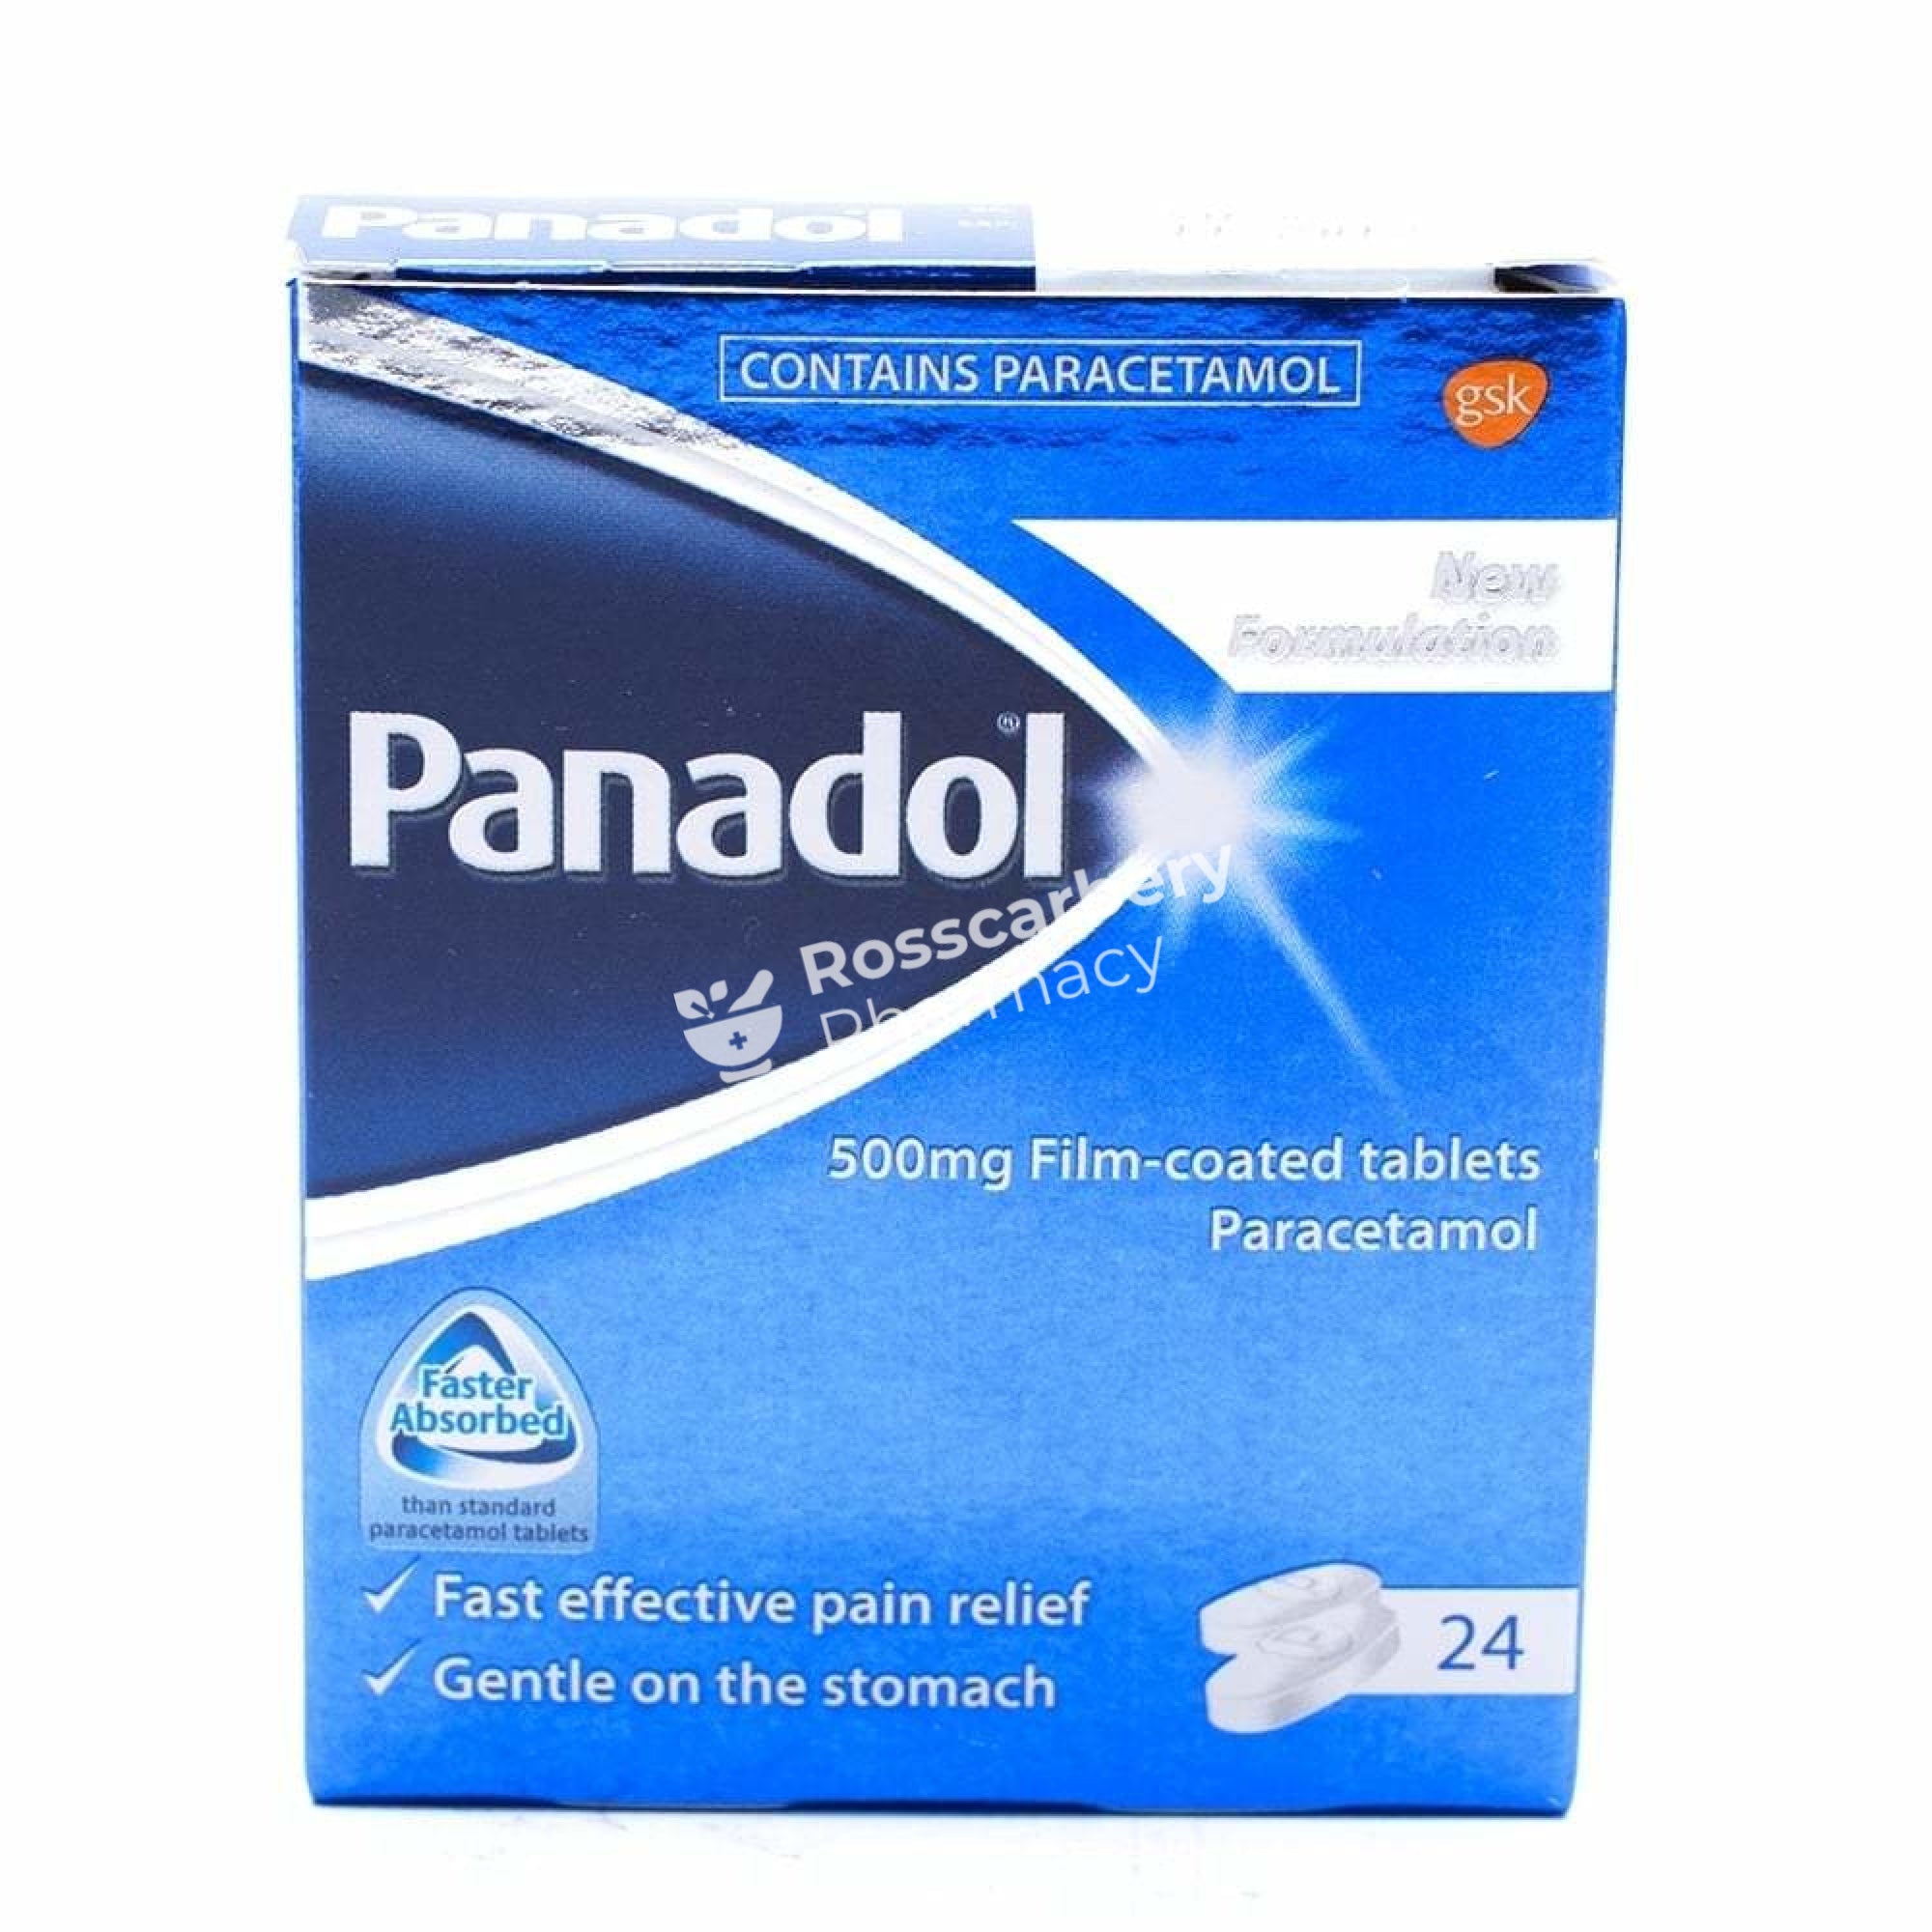 Panadol 500Mg Film-Coated Tablets Paracetamol Pain Relief & Headache